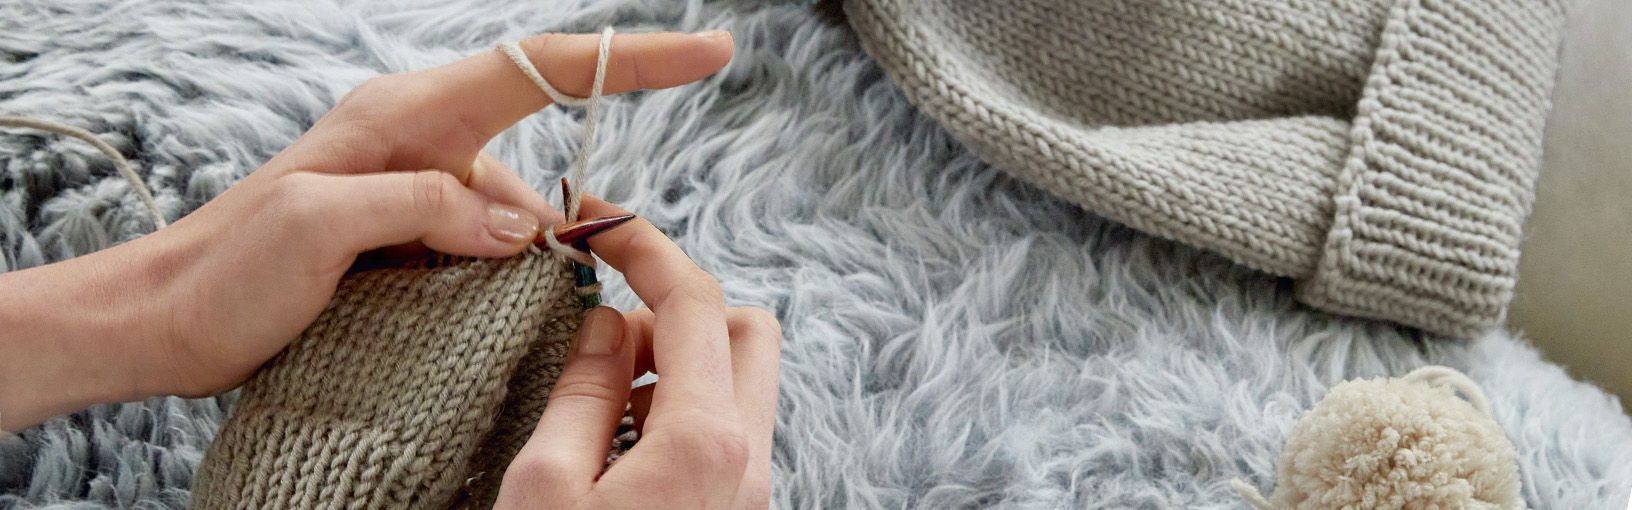 High quality yarns for knitting, crocheting & felting Lana Grossa Yarns | Crochet yarns